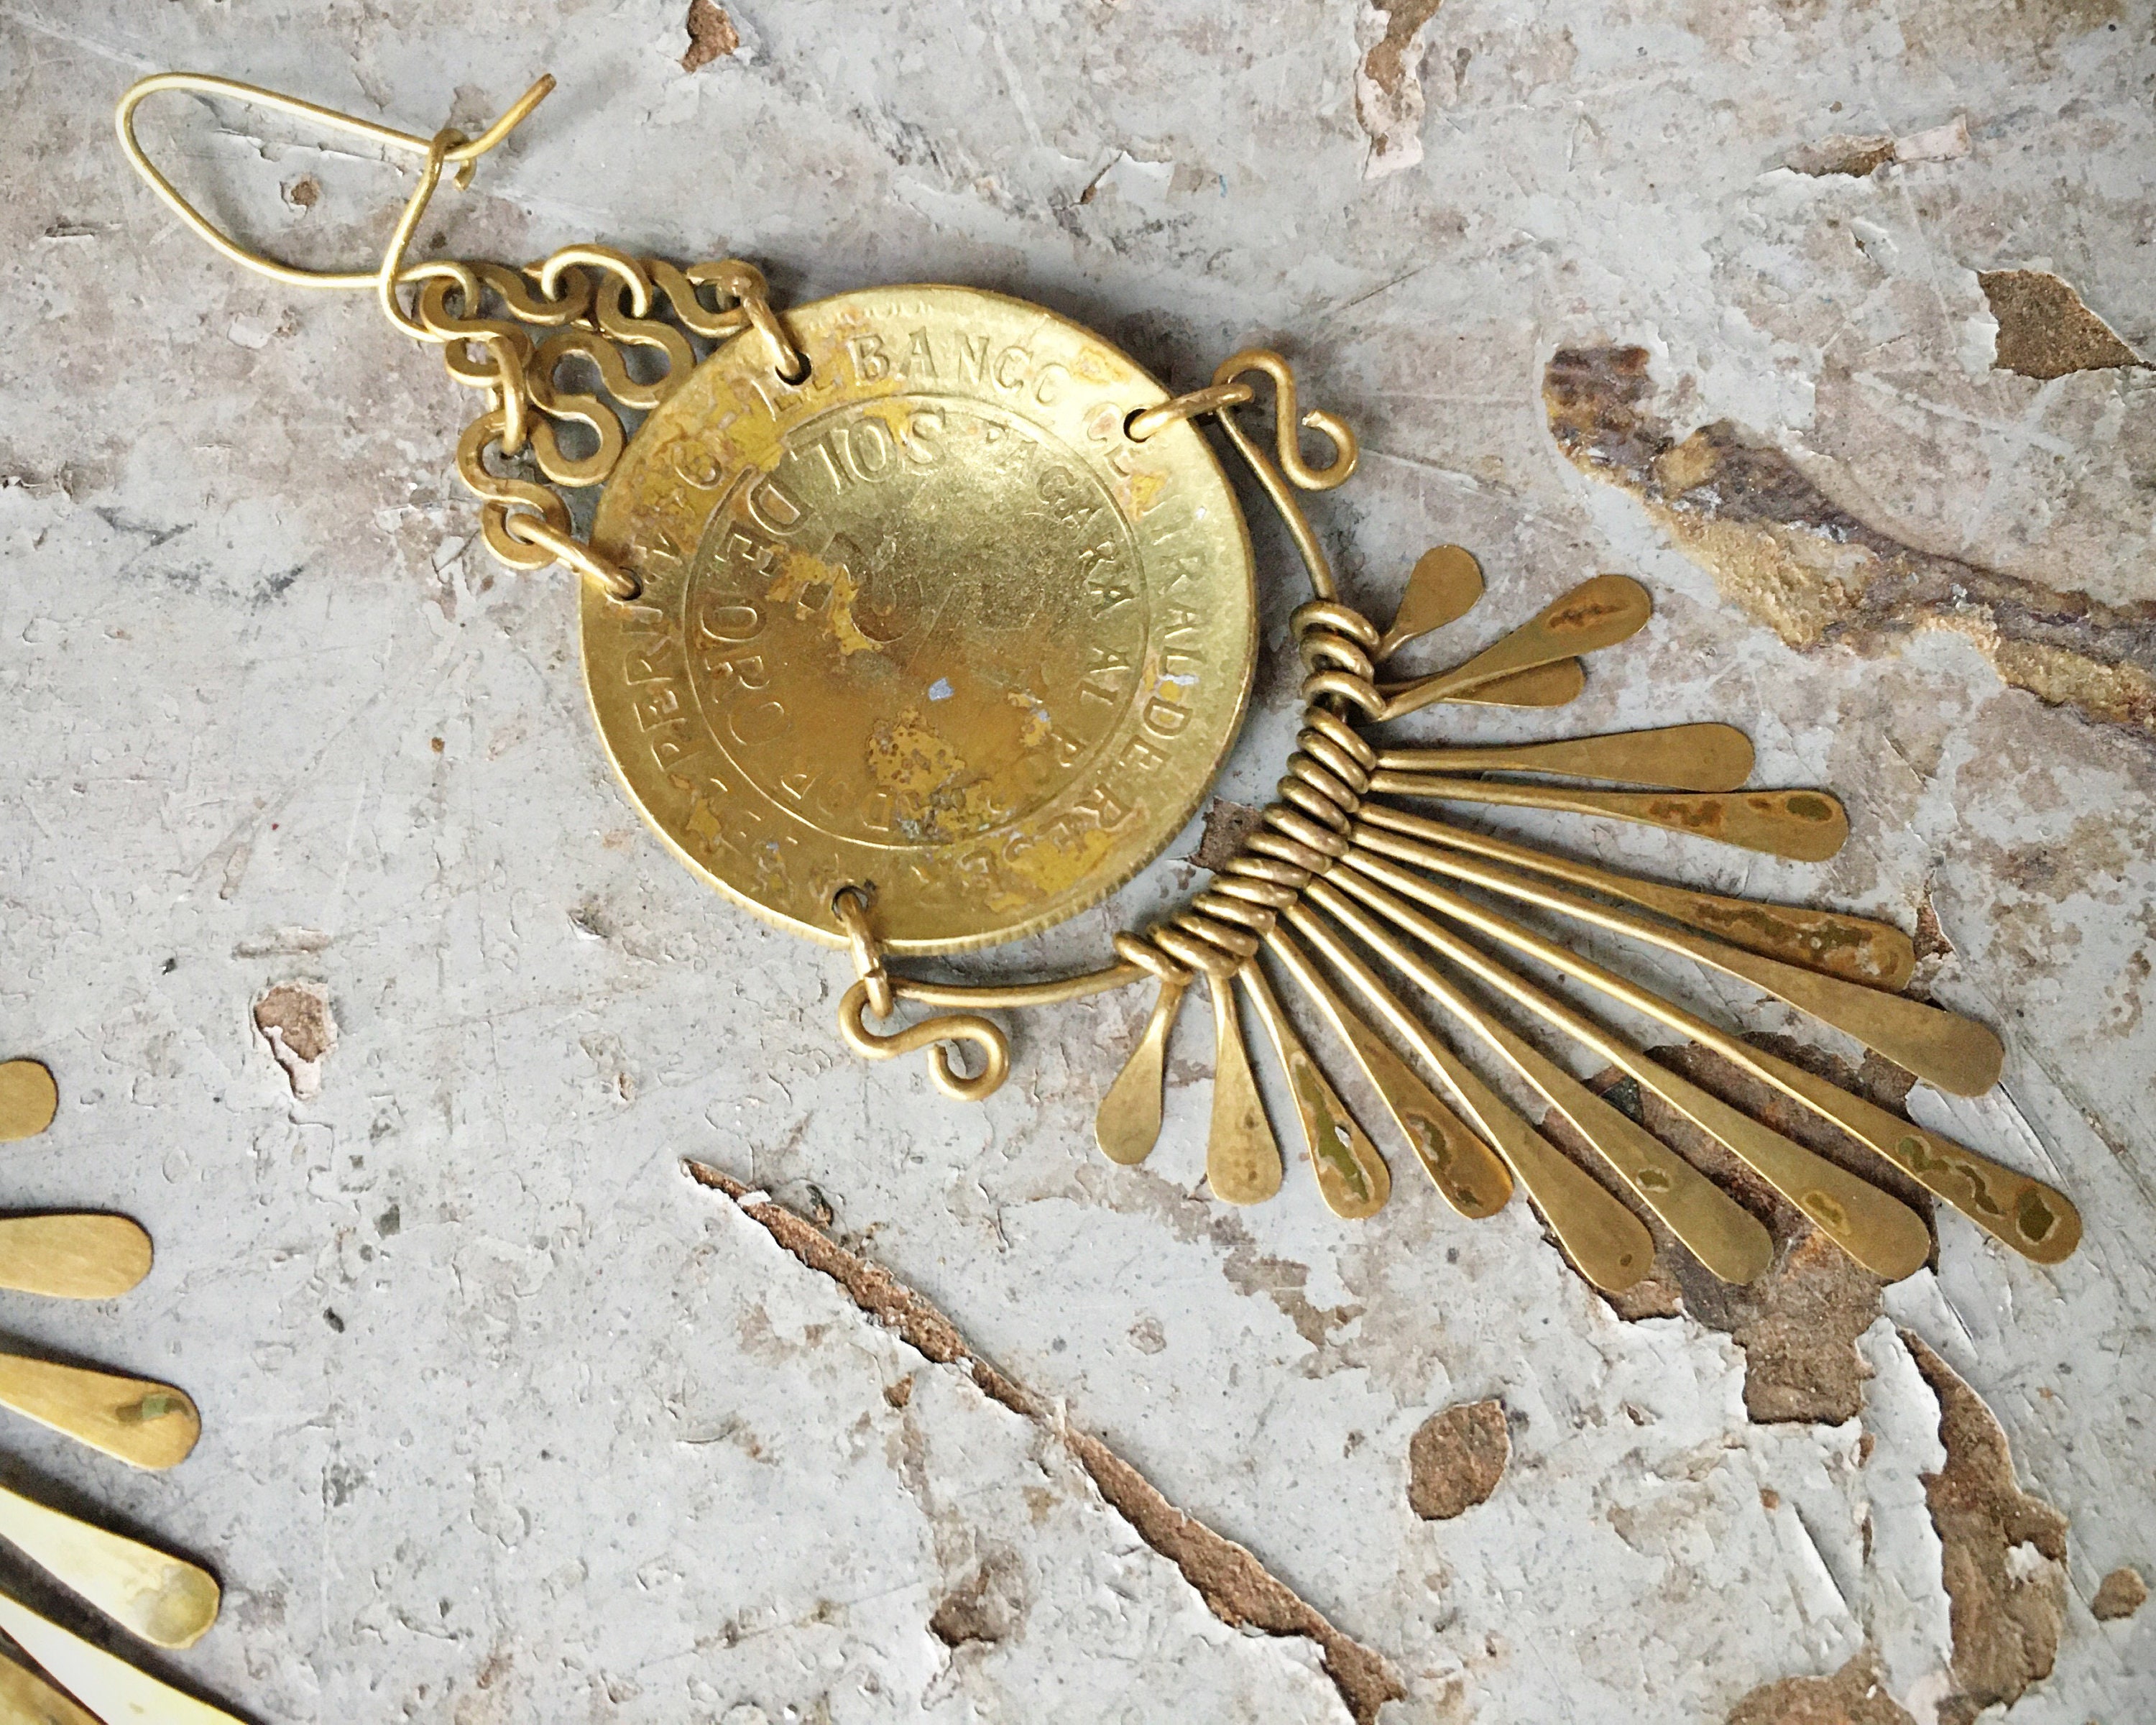 Gold Tone Peruvian Coin Earrings with Dangles for Women, Sol De Oro ...